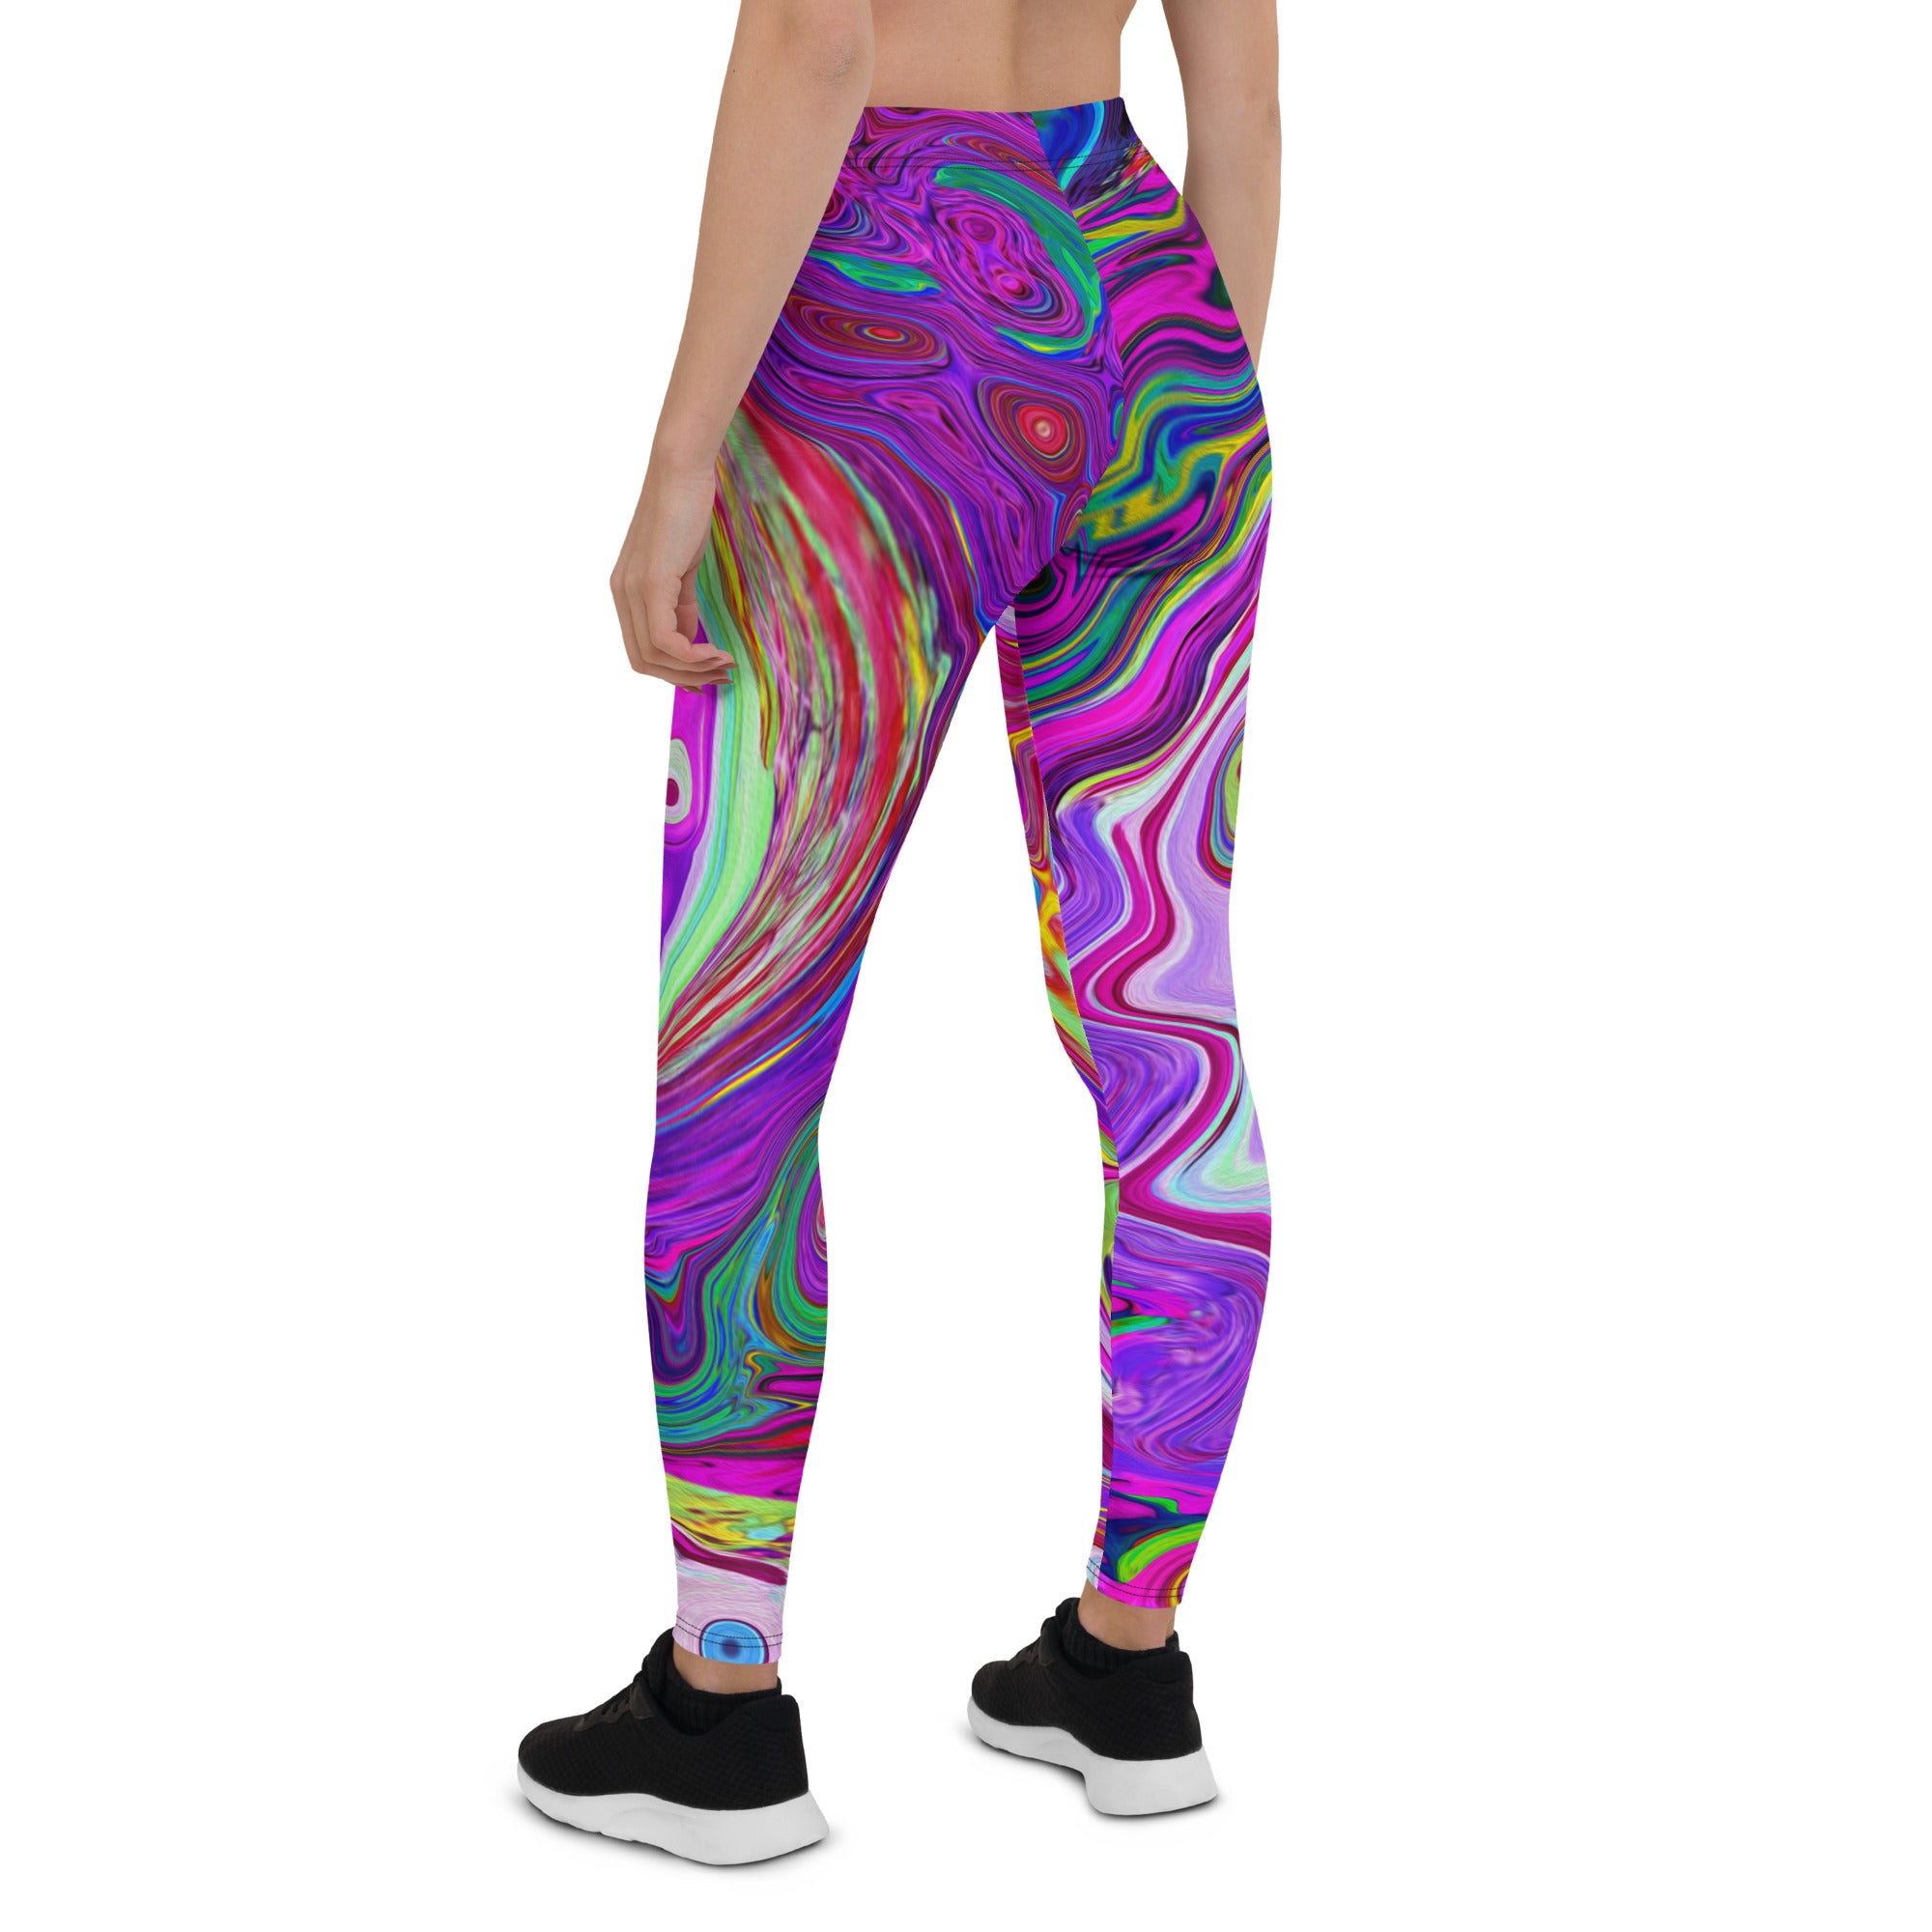 Leggings for Women, Groovy Abstract Retro Magenta Rainbow Swirl